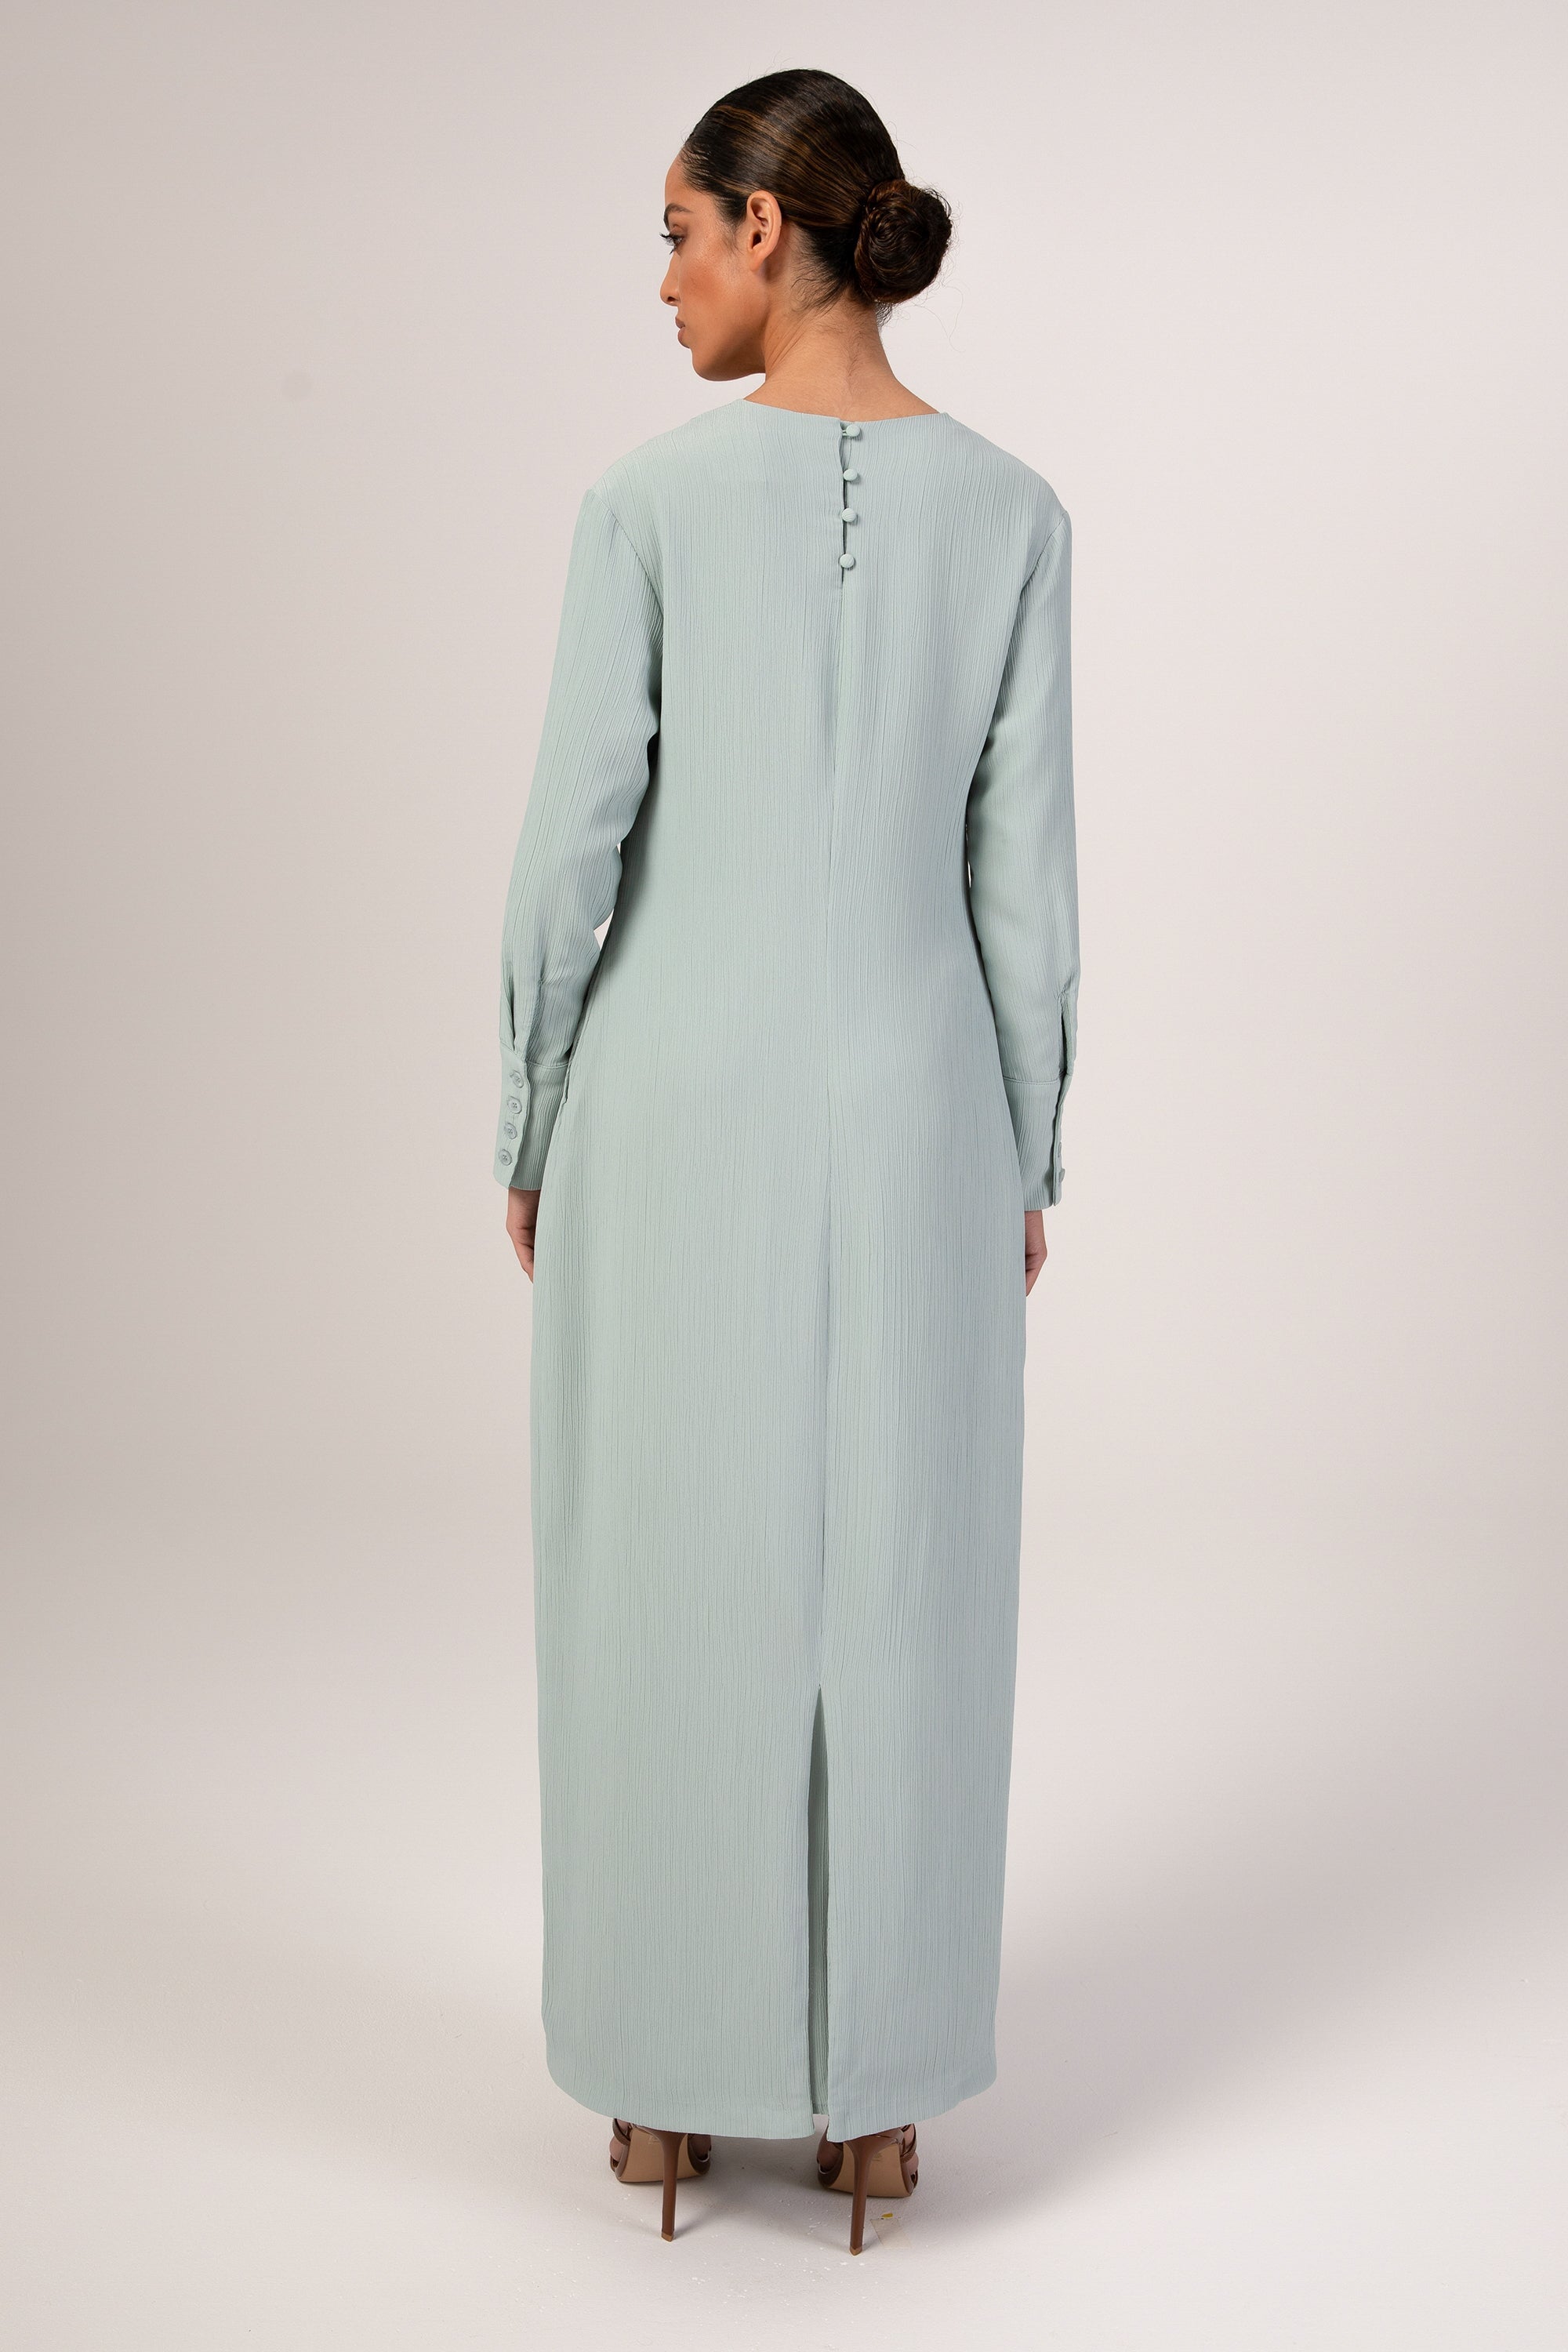 Sajda Textured Maxi Dress - Stillwater Veiled 